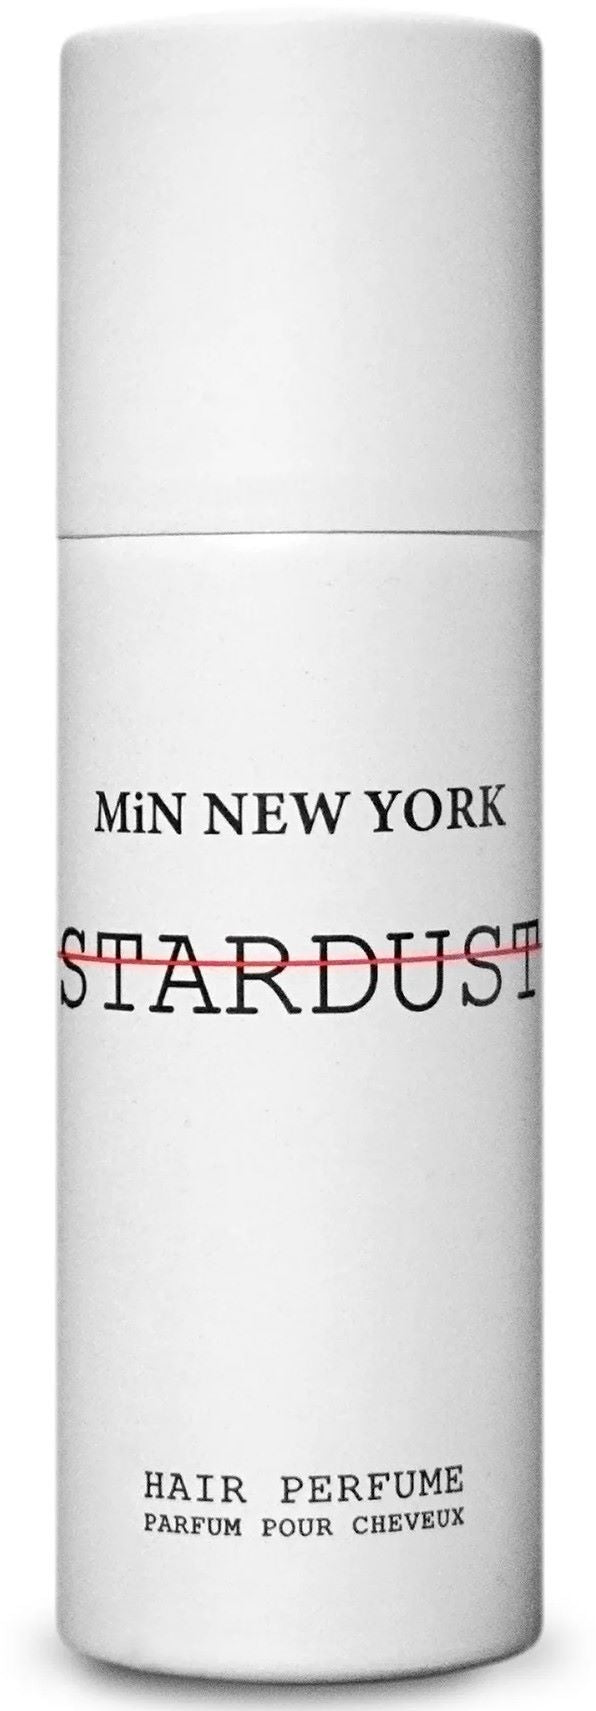 stardust hair parfum